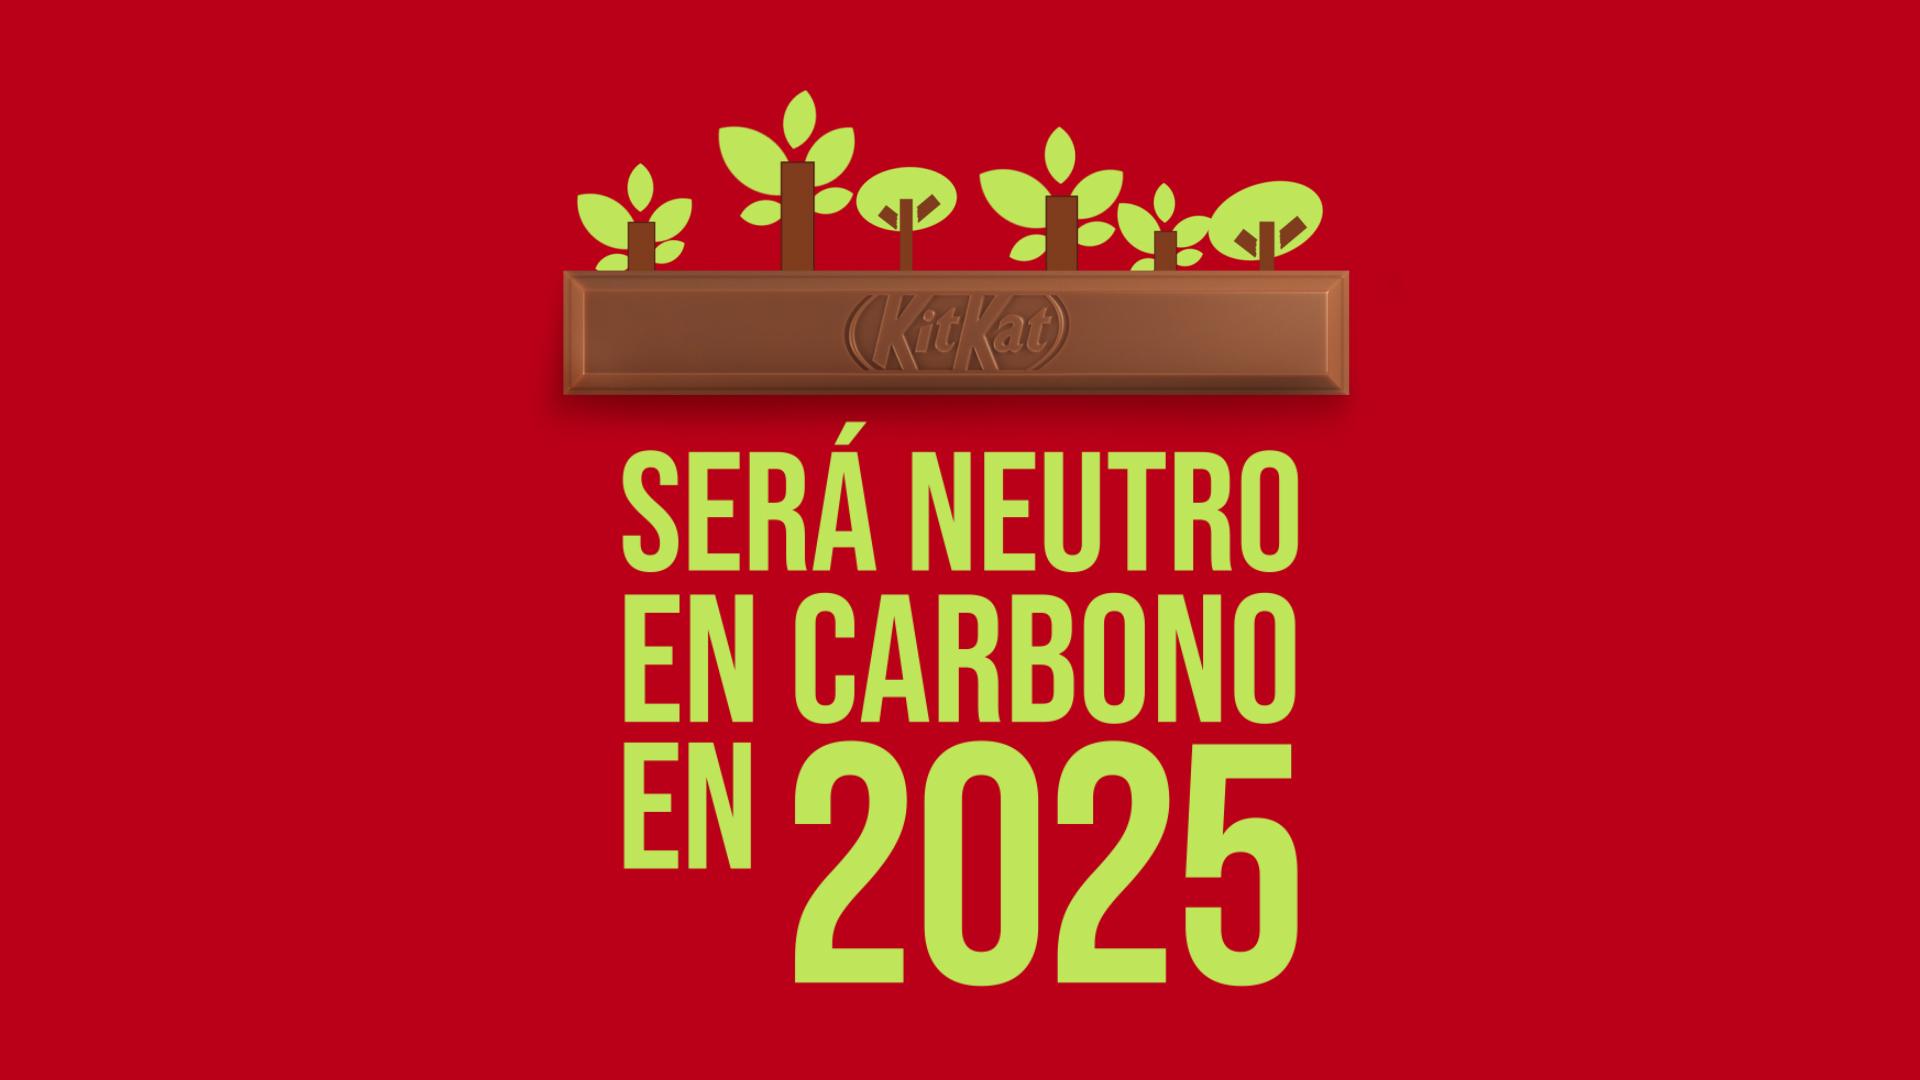 AN 0521 KITKAT será neutra en carbono para 2025